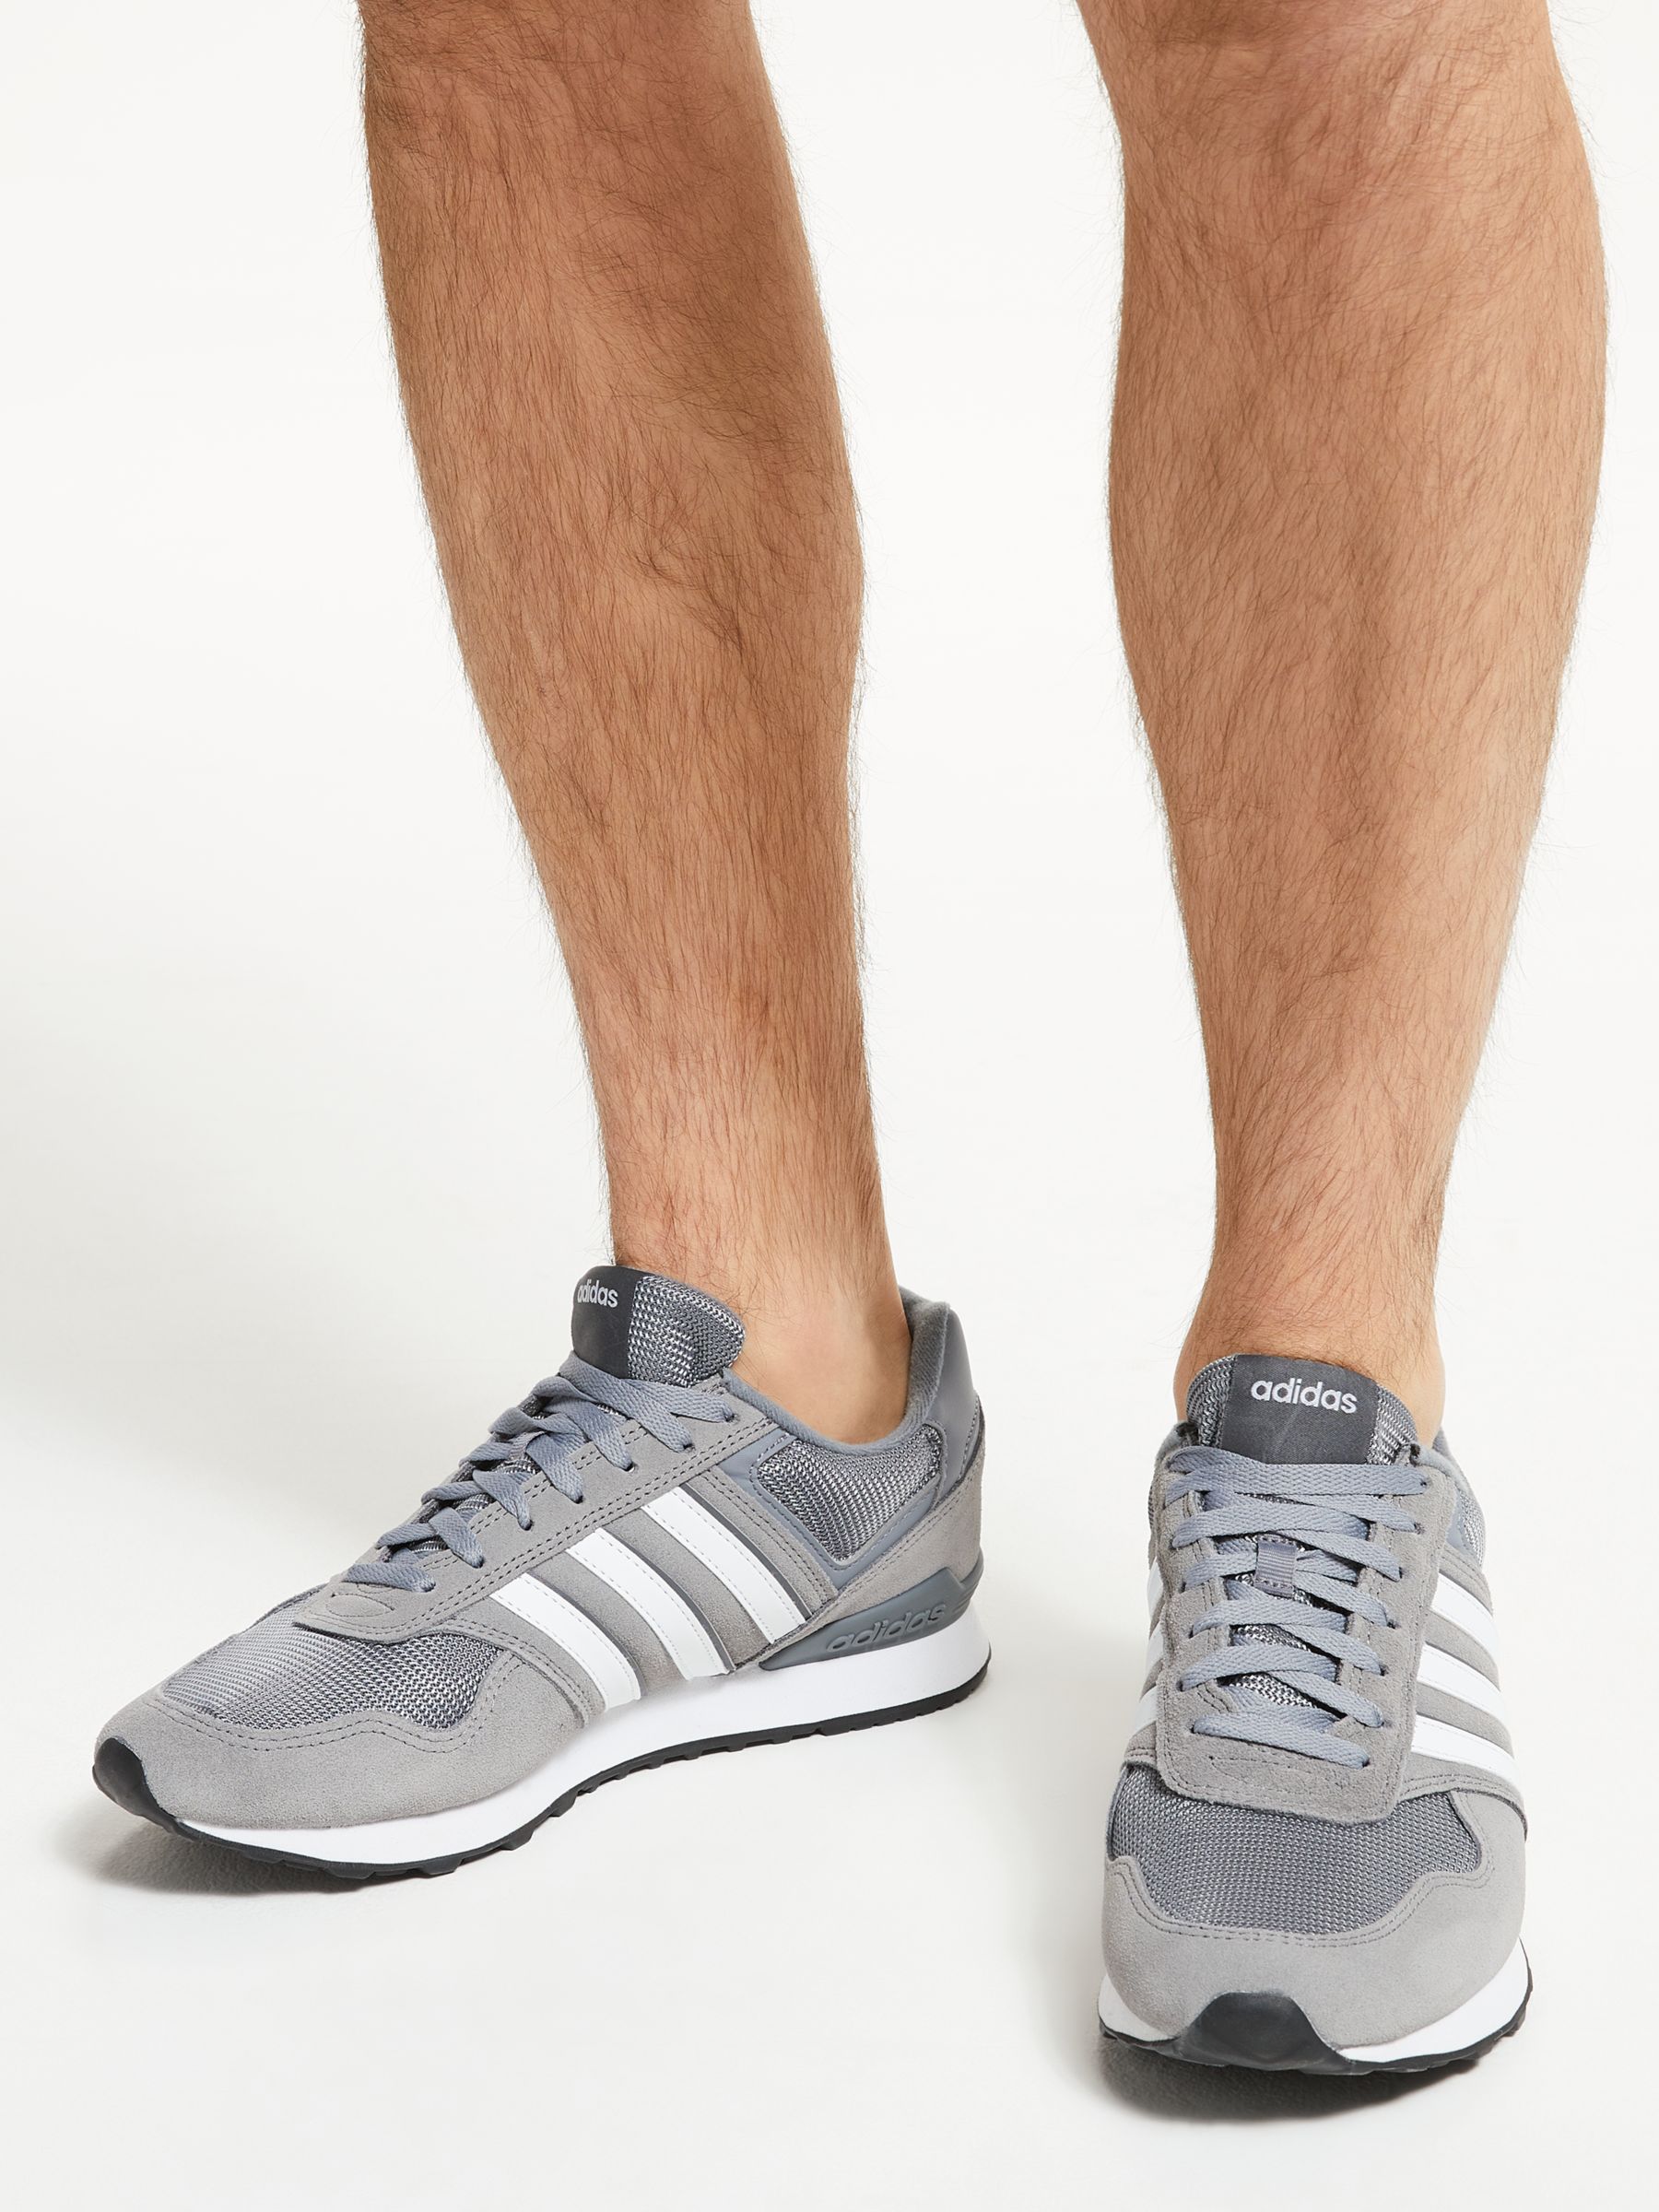 adidas 10k grey running shoes